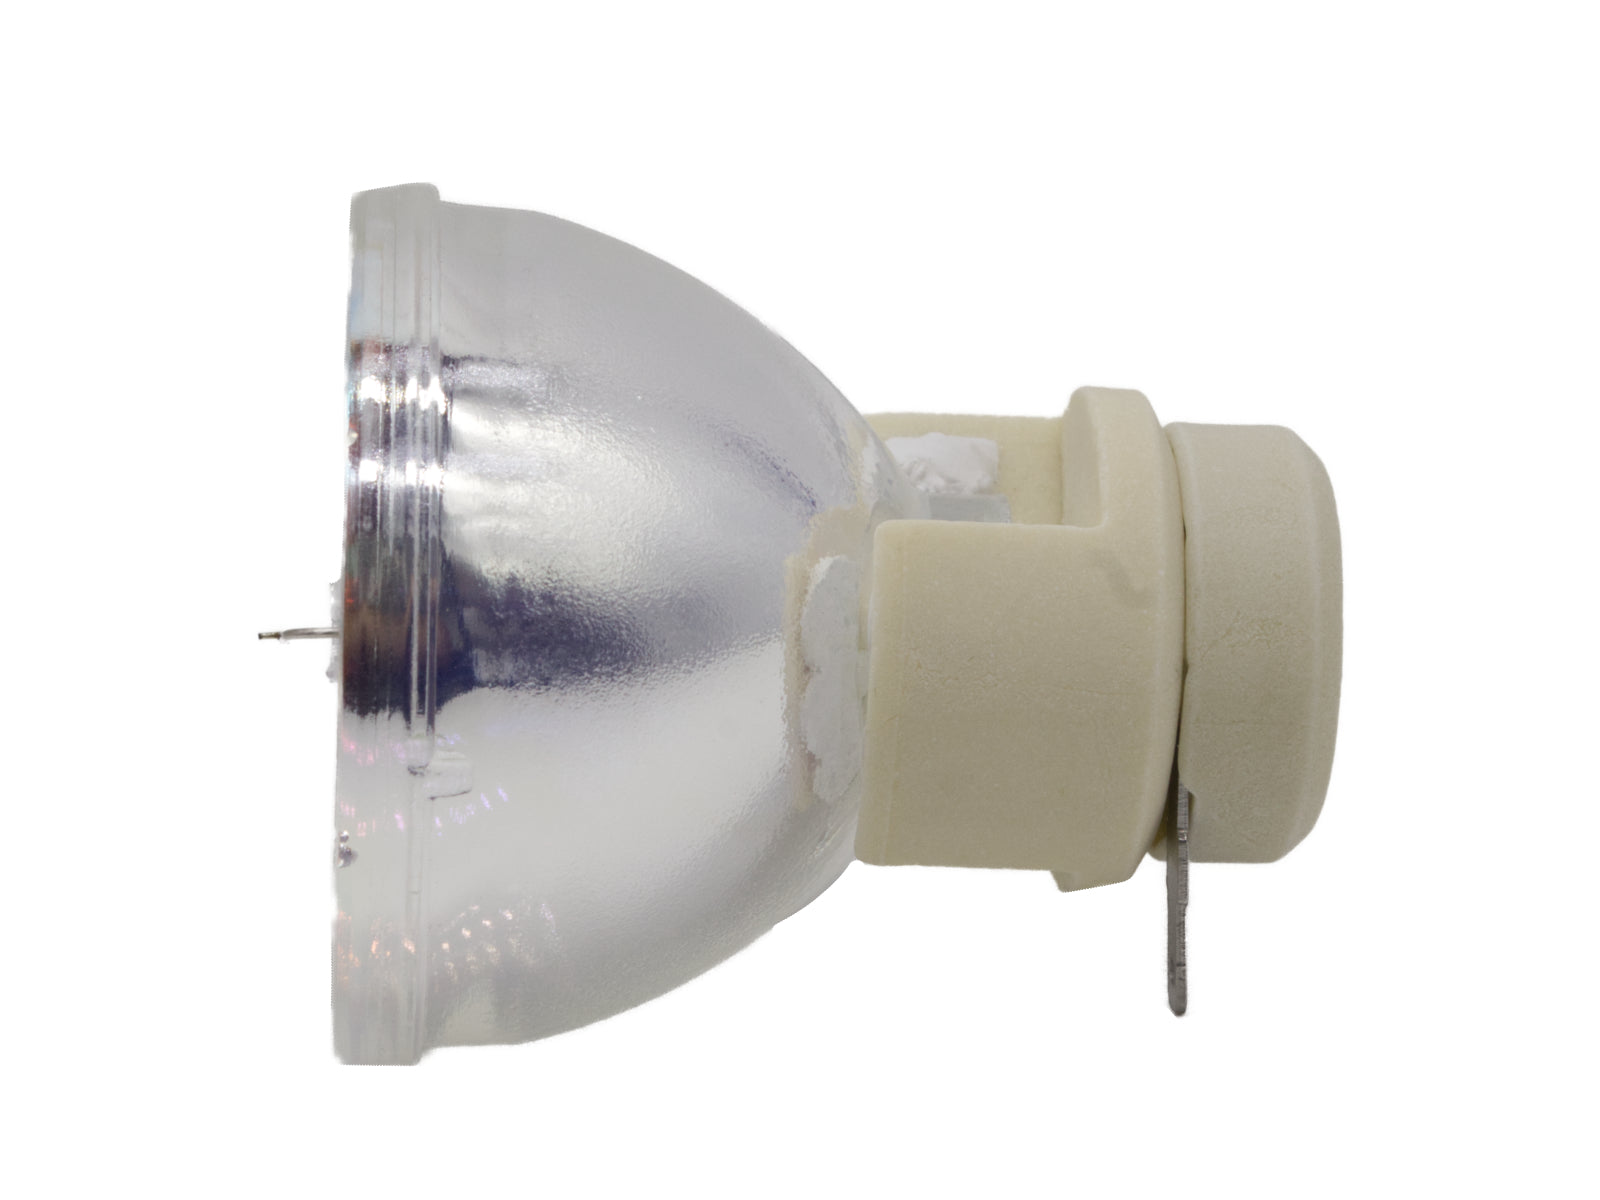 azurano Beamerlampe für ACER EC.J9900.001 Ersatzlampe Projektorlampe - Bild 2